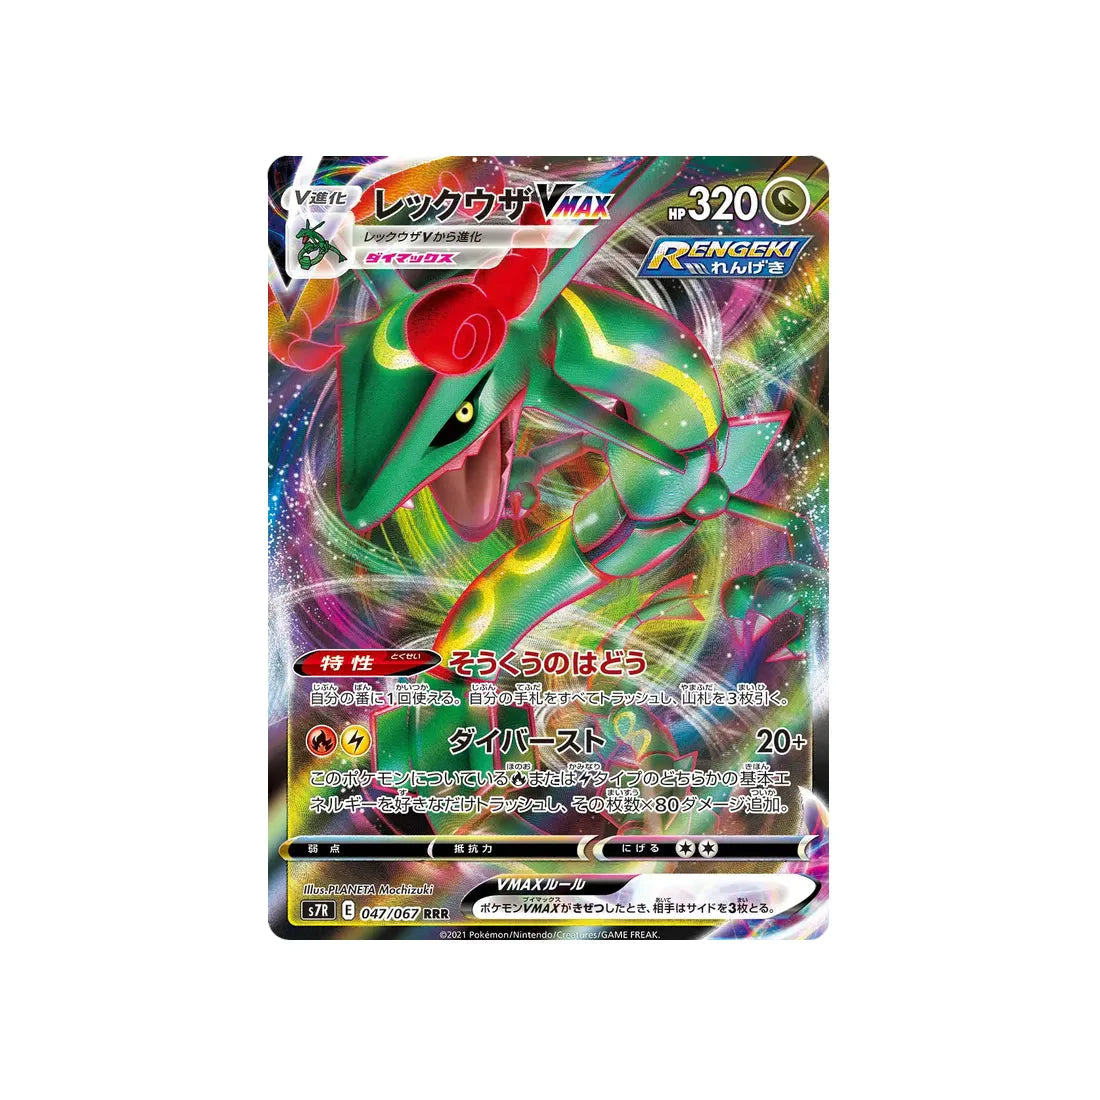 Pokémon Card Blue Sky Stream S7R 047/067: Rayquaza Vmax 